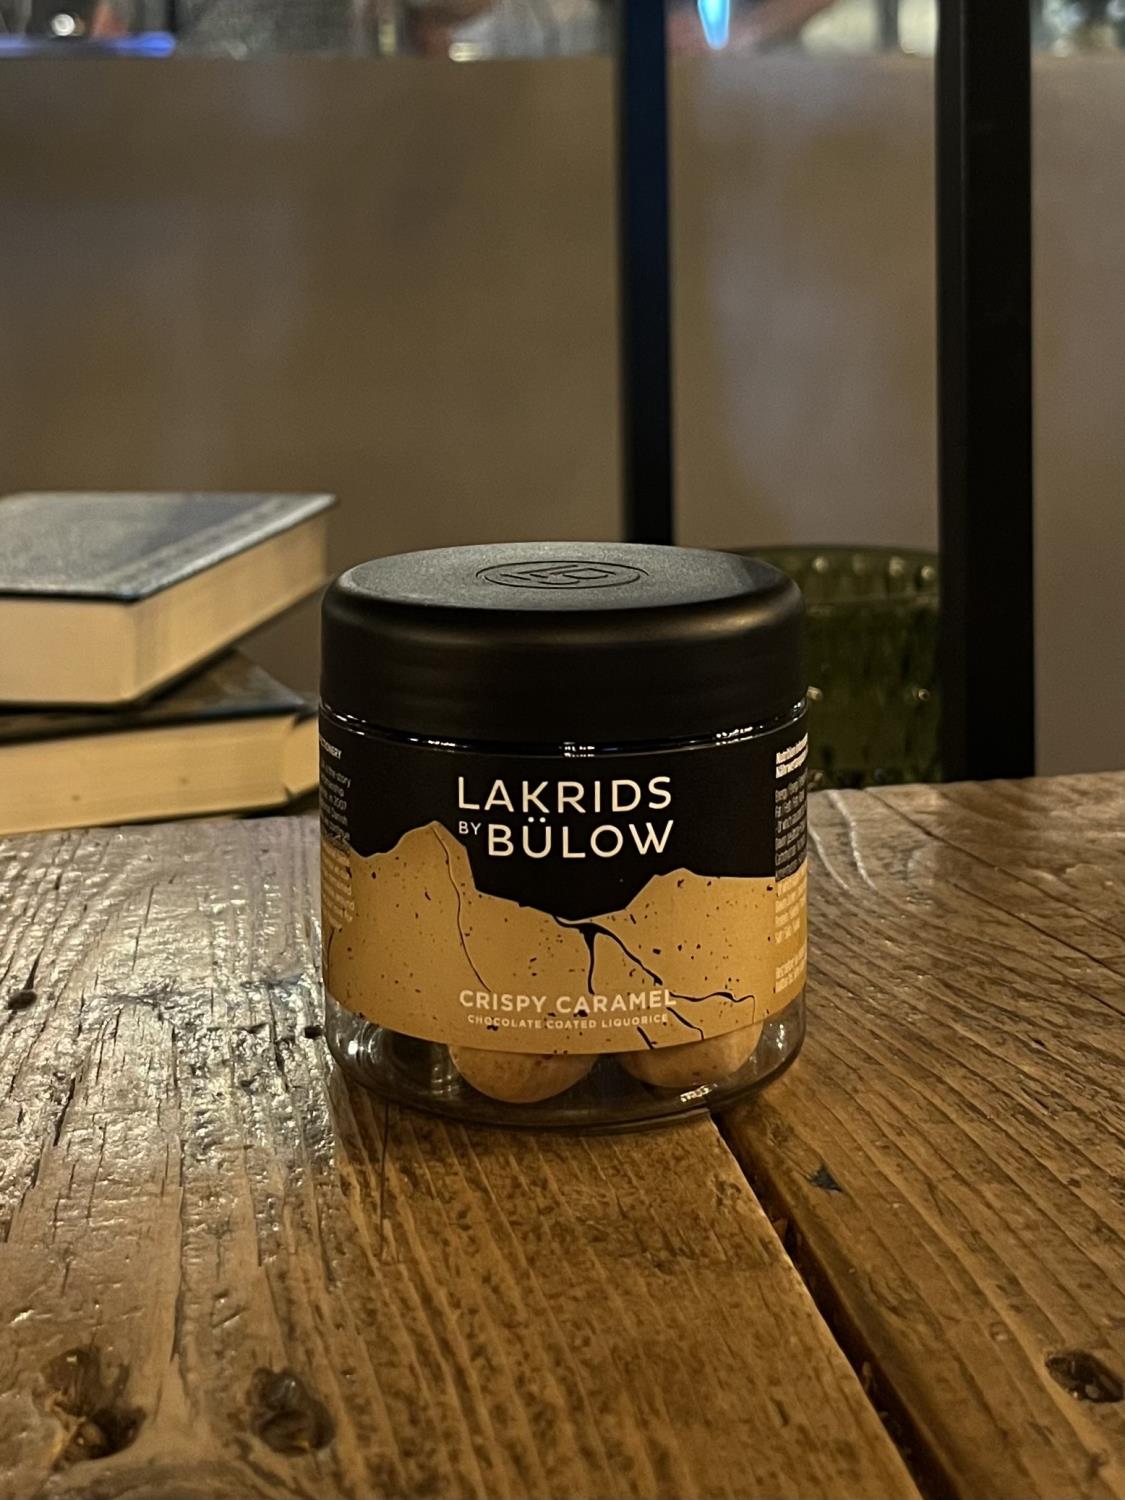 Crispy caramel Ægg, Lakrids by bullow 125g